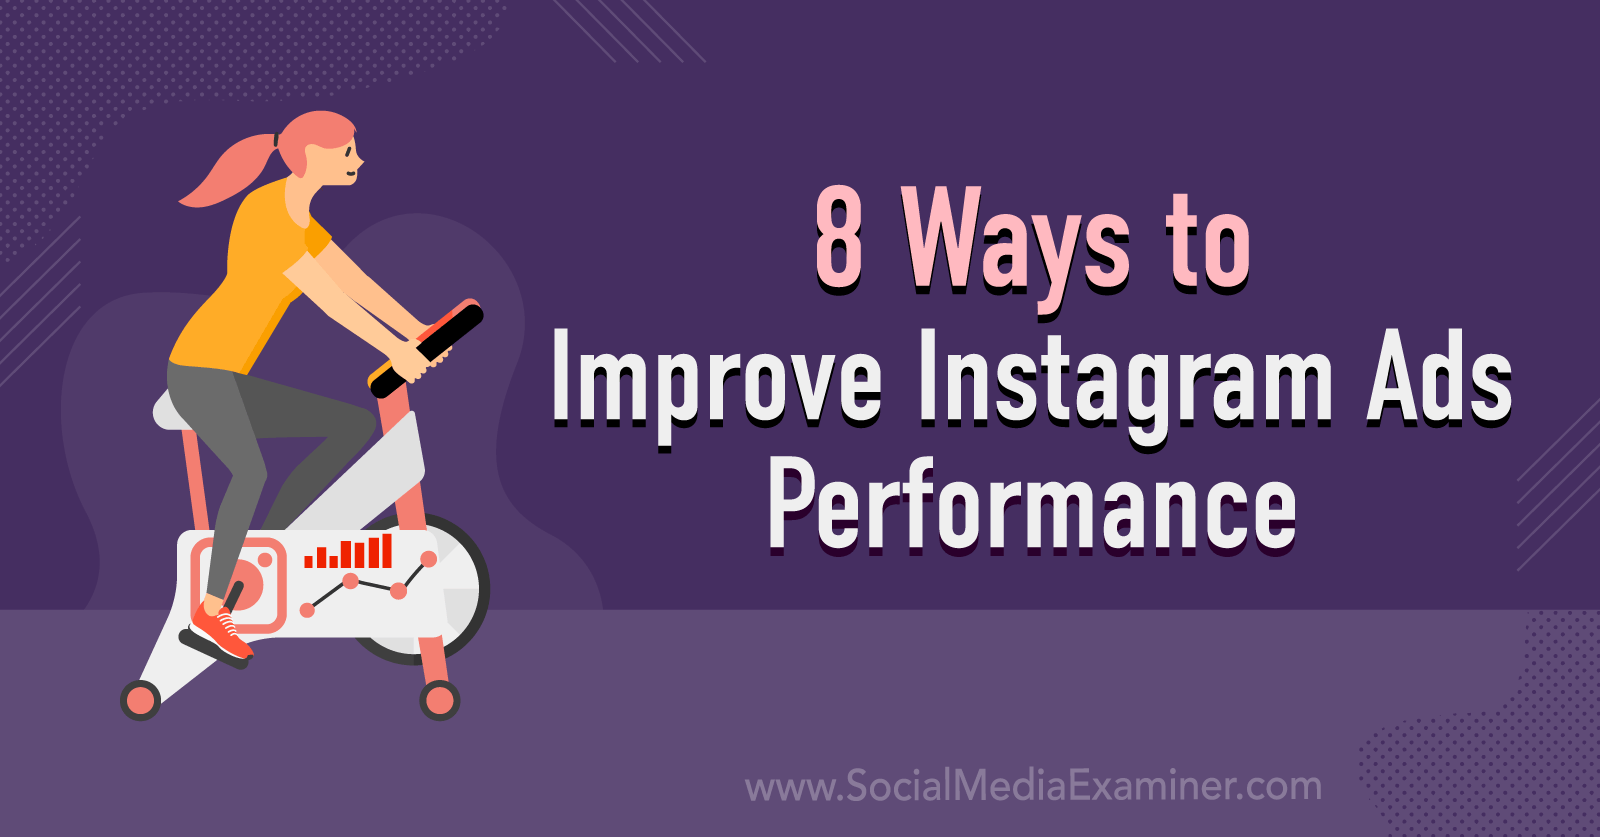 8 Ways to Improve Instagram Ads Performance by Anna Sonnenberg